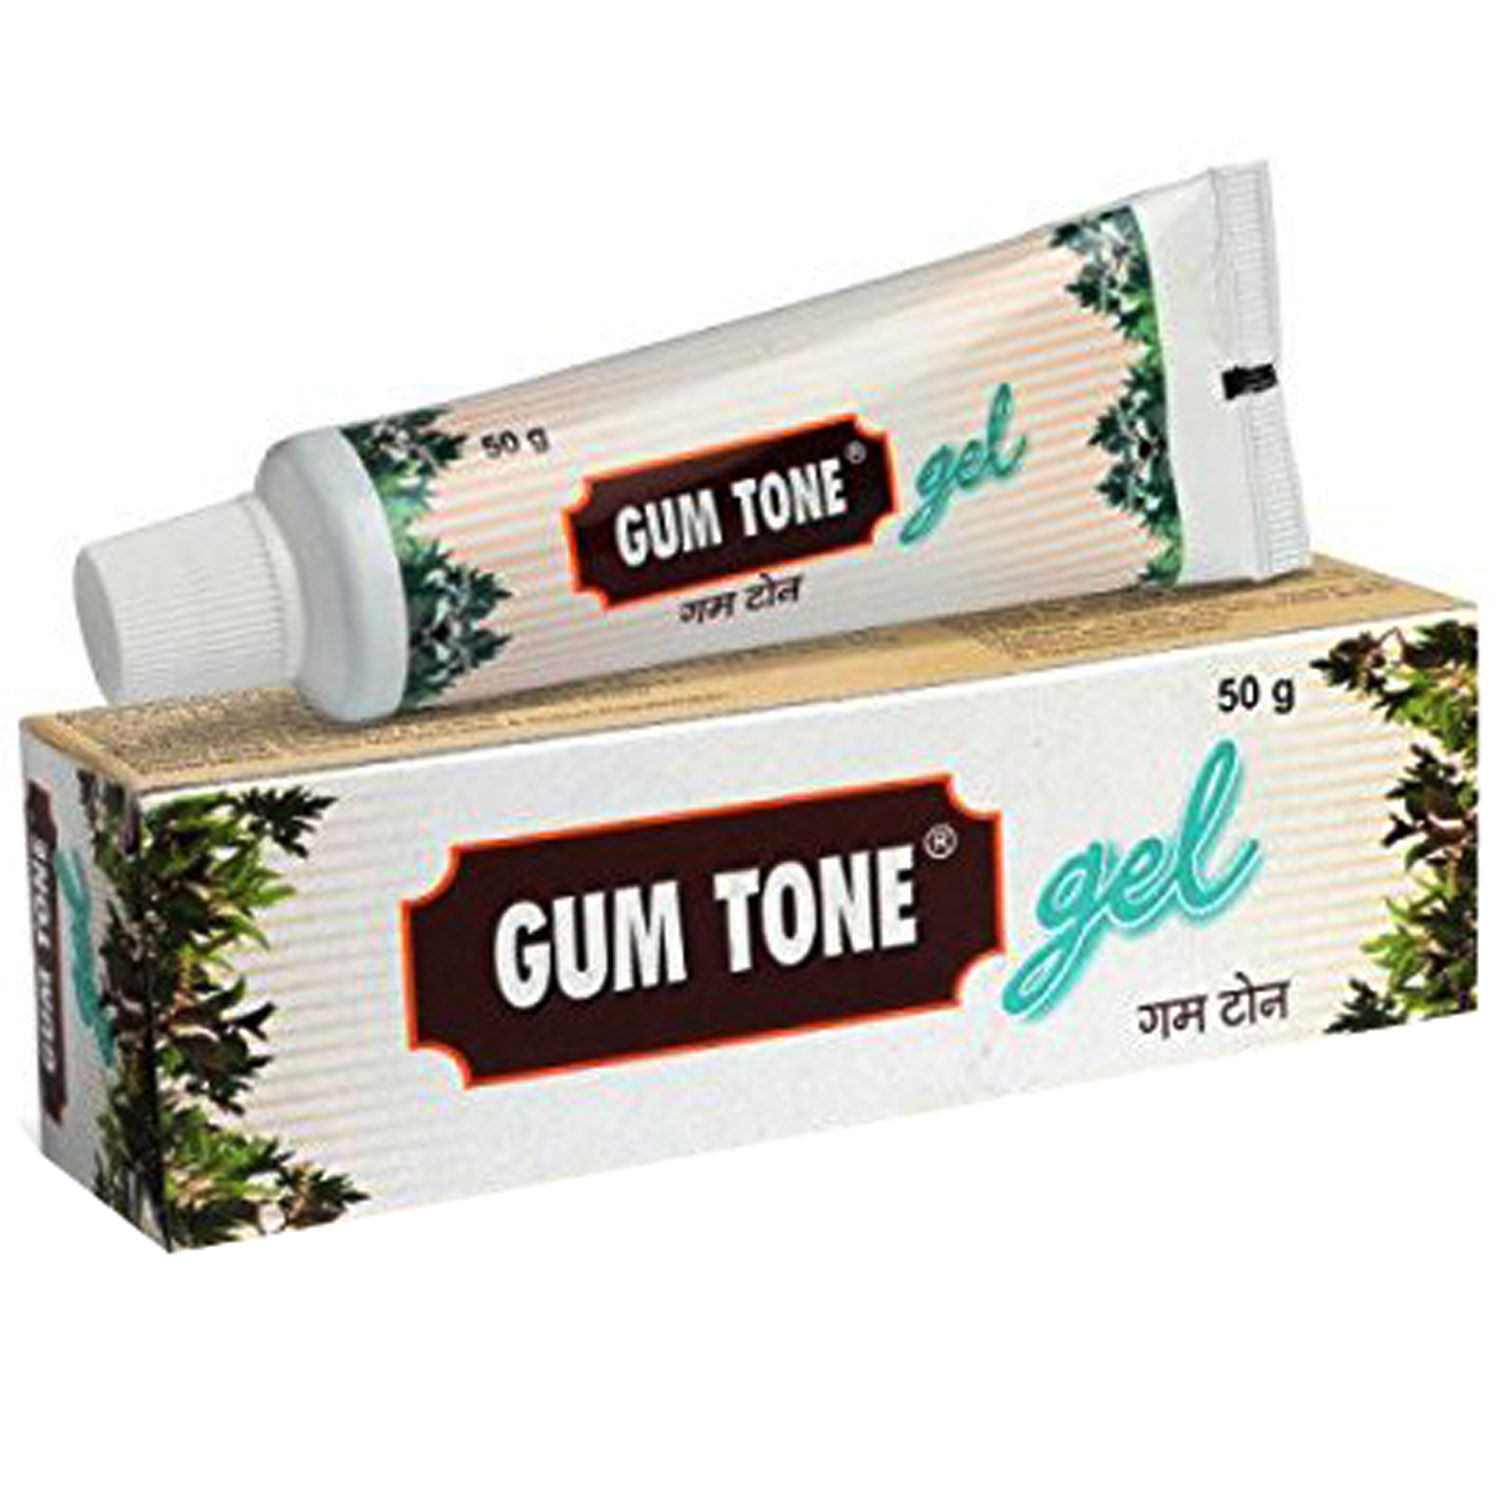 Gum Tone Gel, 50 gm, Pack of 1 